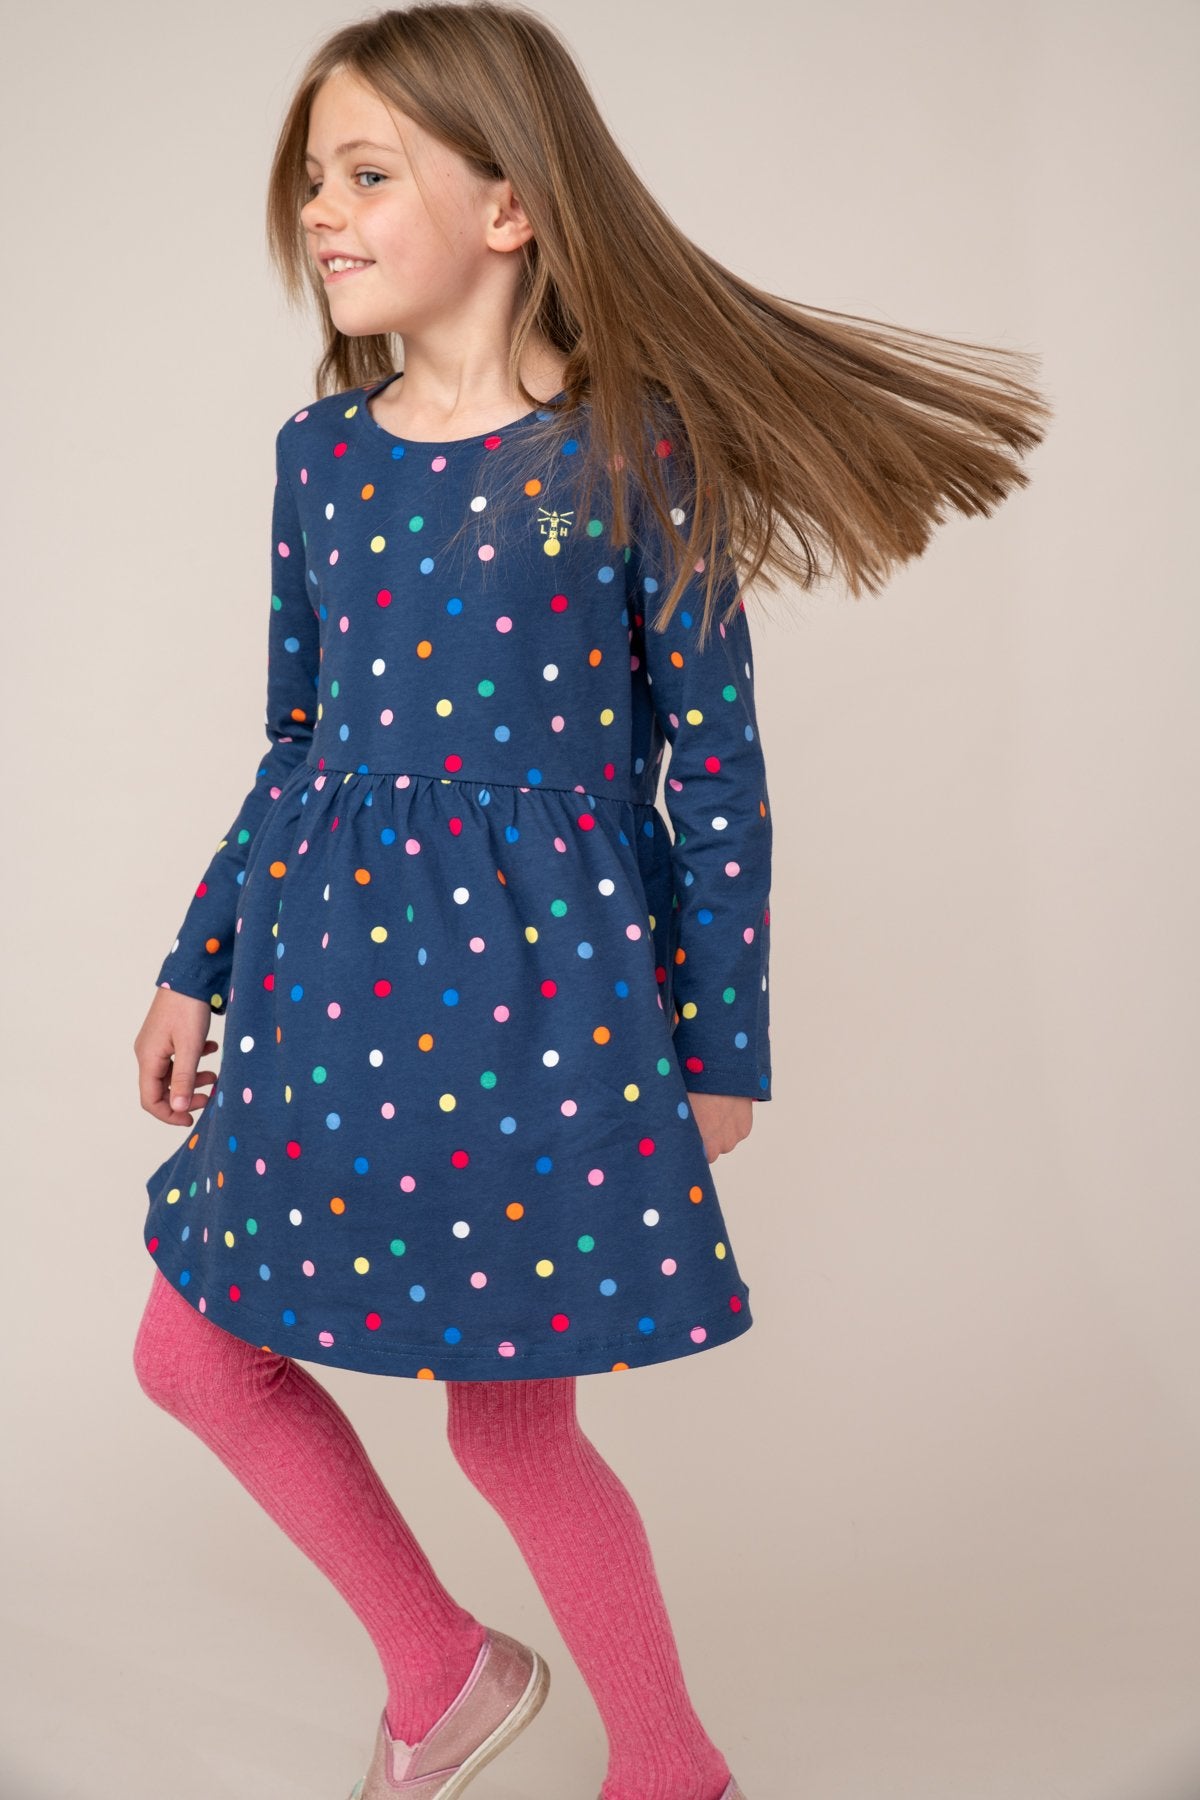 Lighthouse Kids Ellie Dress - Dot Print